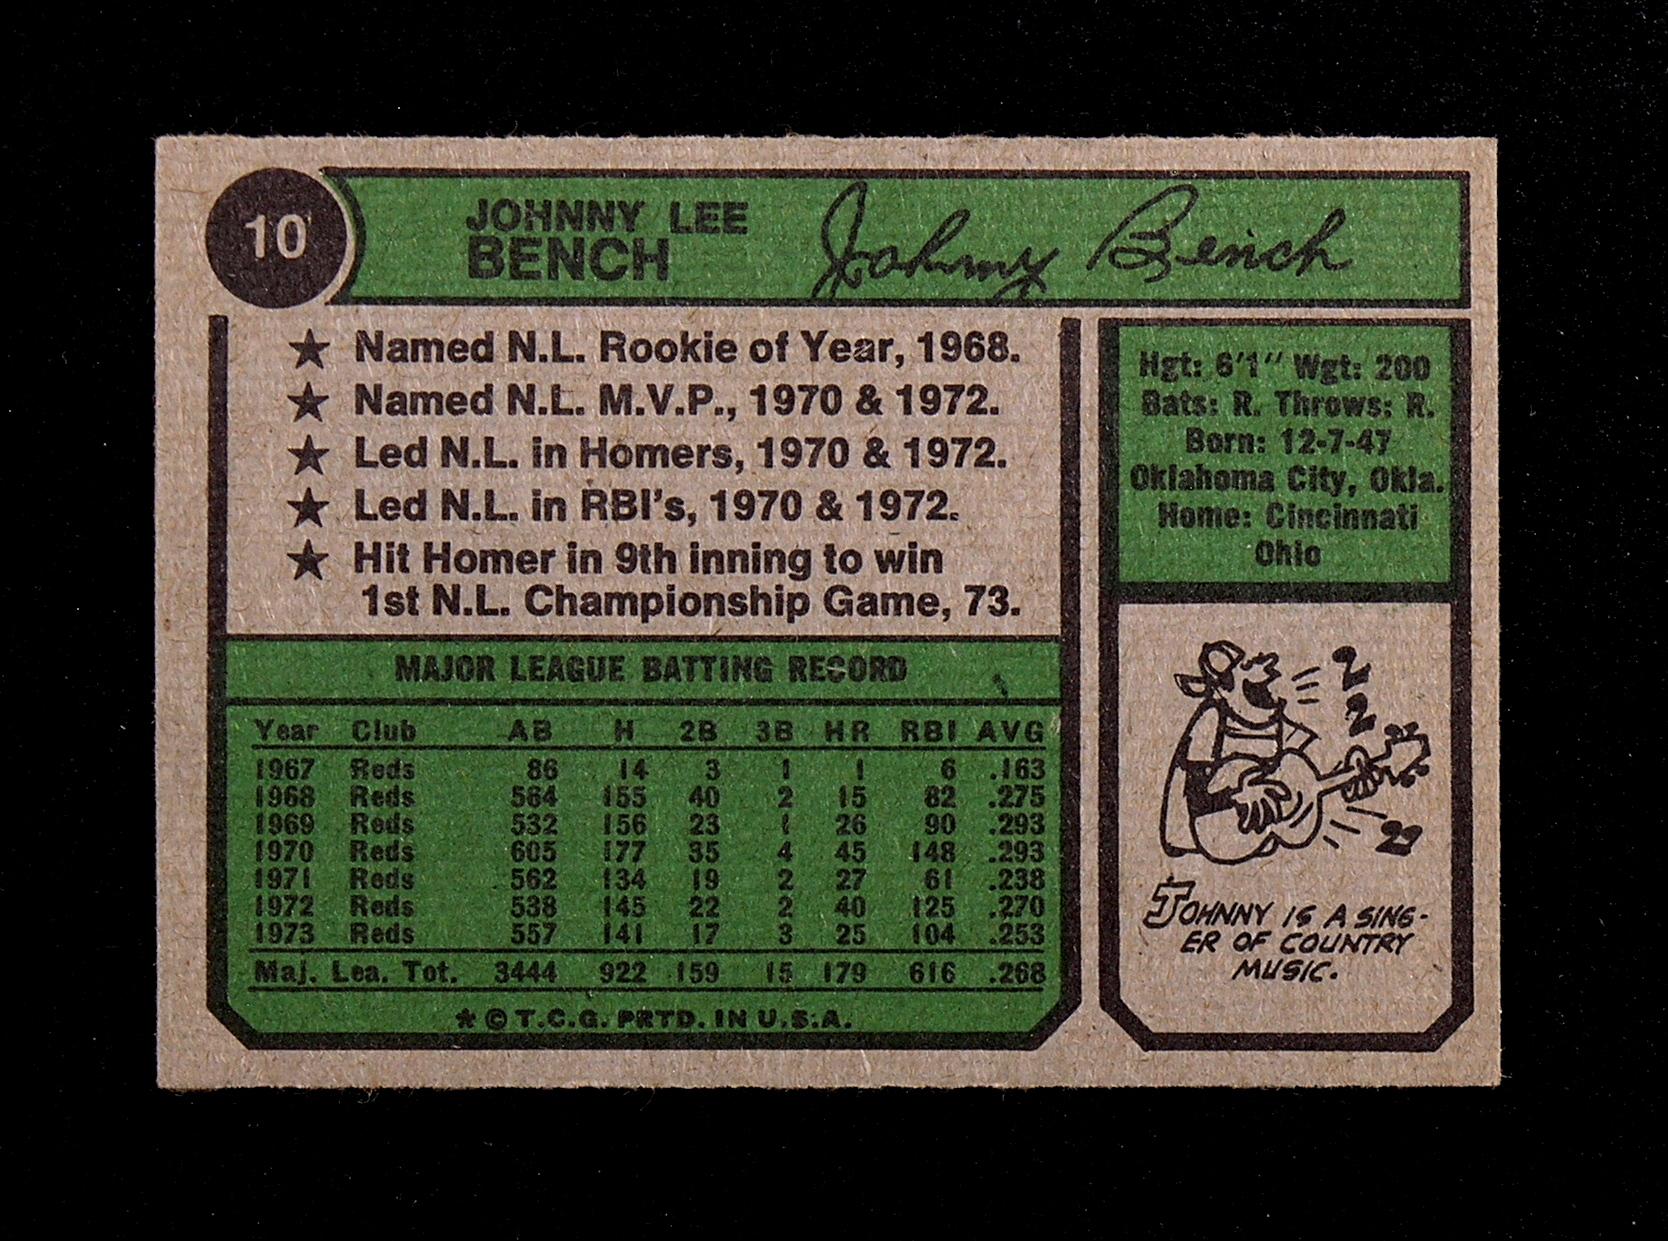 1974 Topps Baseball Card #10 Hall of Famer Johnny Bench Cincinnati Reds